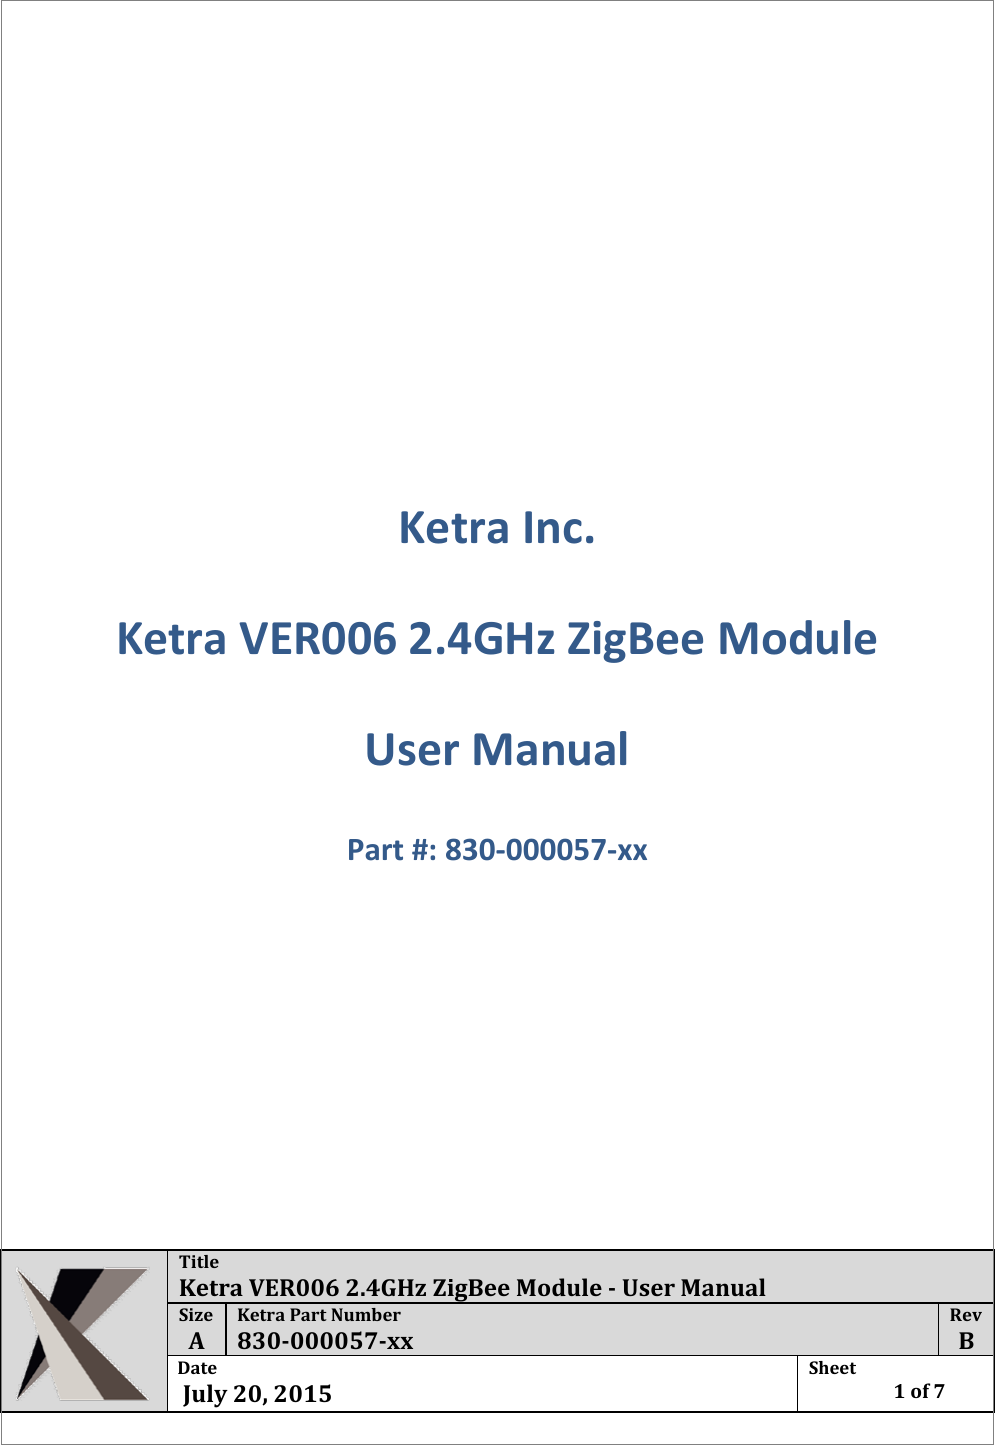  Title Ketra VER006 2.4GHz ZigBee Module - User Manual Size  A Ketra Part Number 830-000057-xx Rev  B Date   July 20, 2015 Sheet    1 of 7      Ketra Inc. Ketra VER006 2.4GHz ZigBee Module  User Manual Part #: 830-000057-xx   